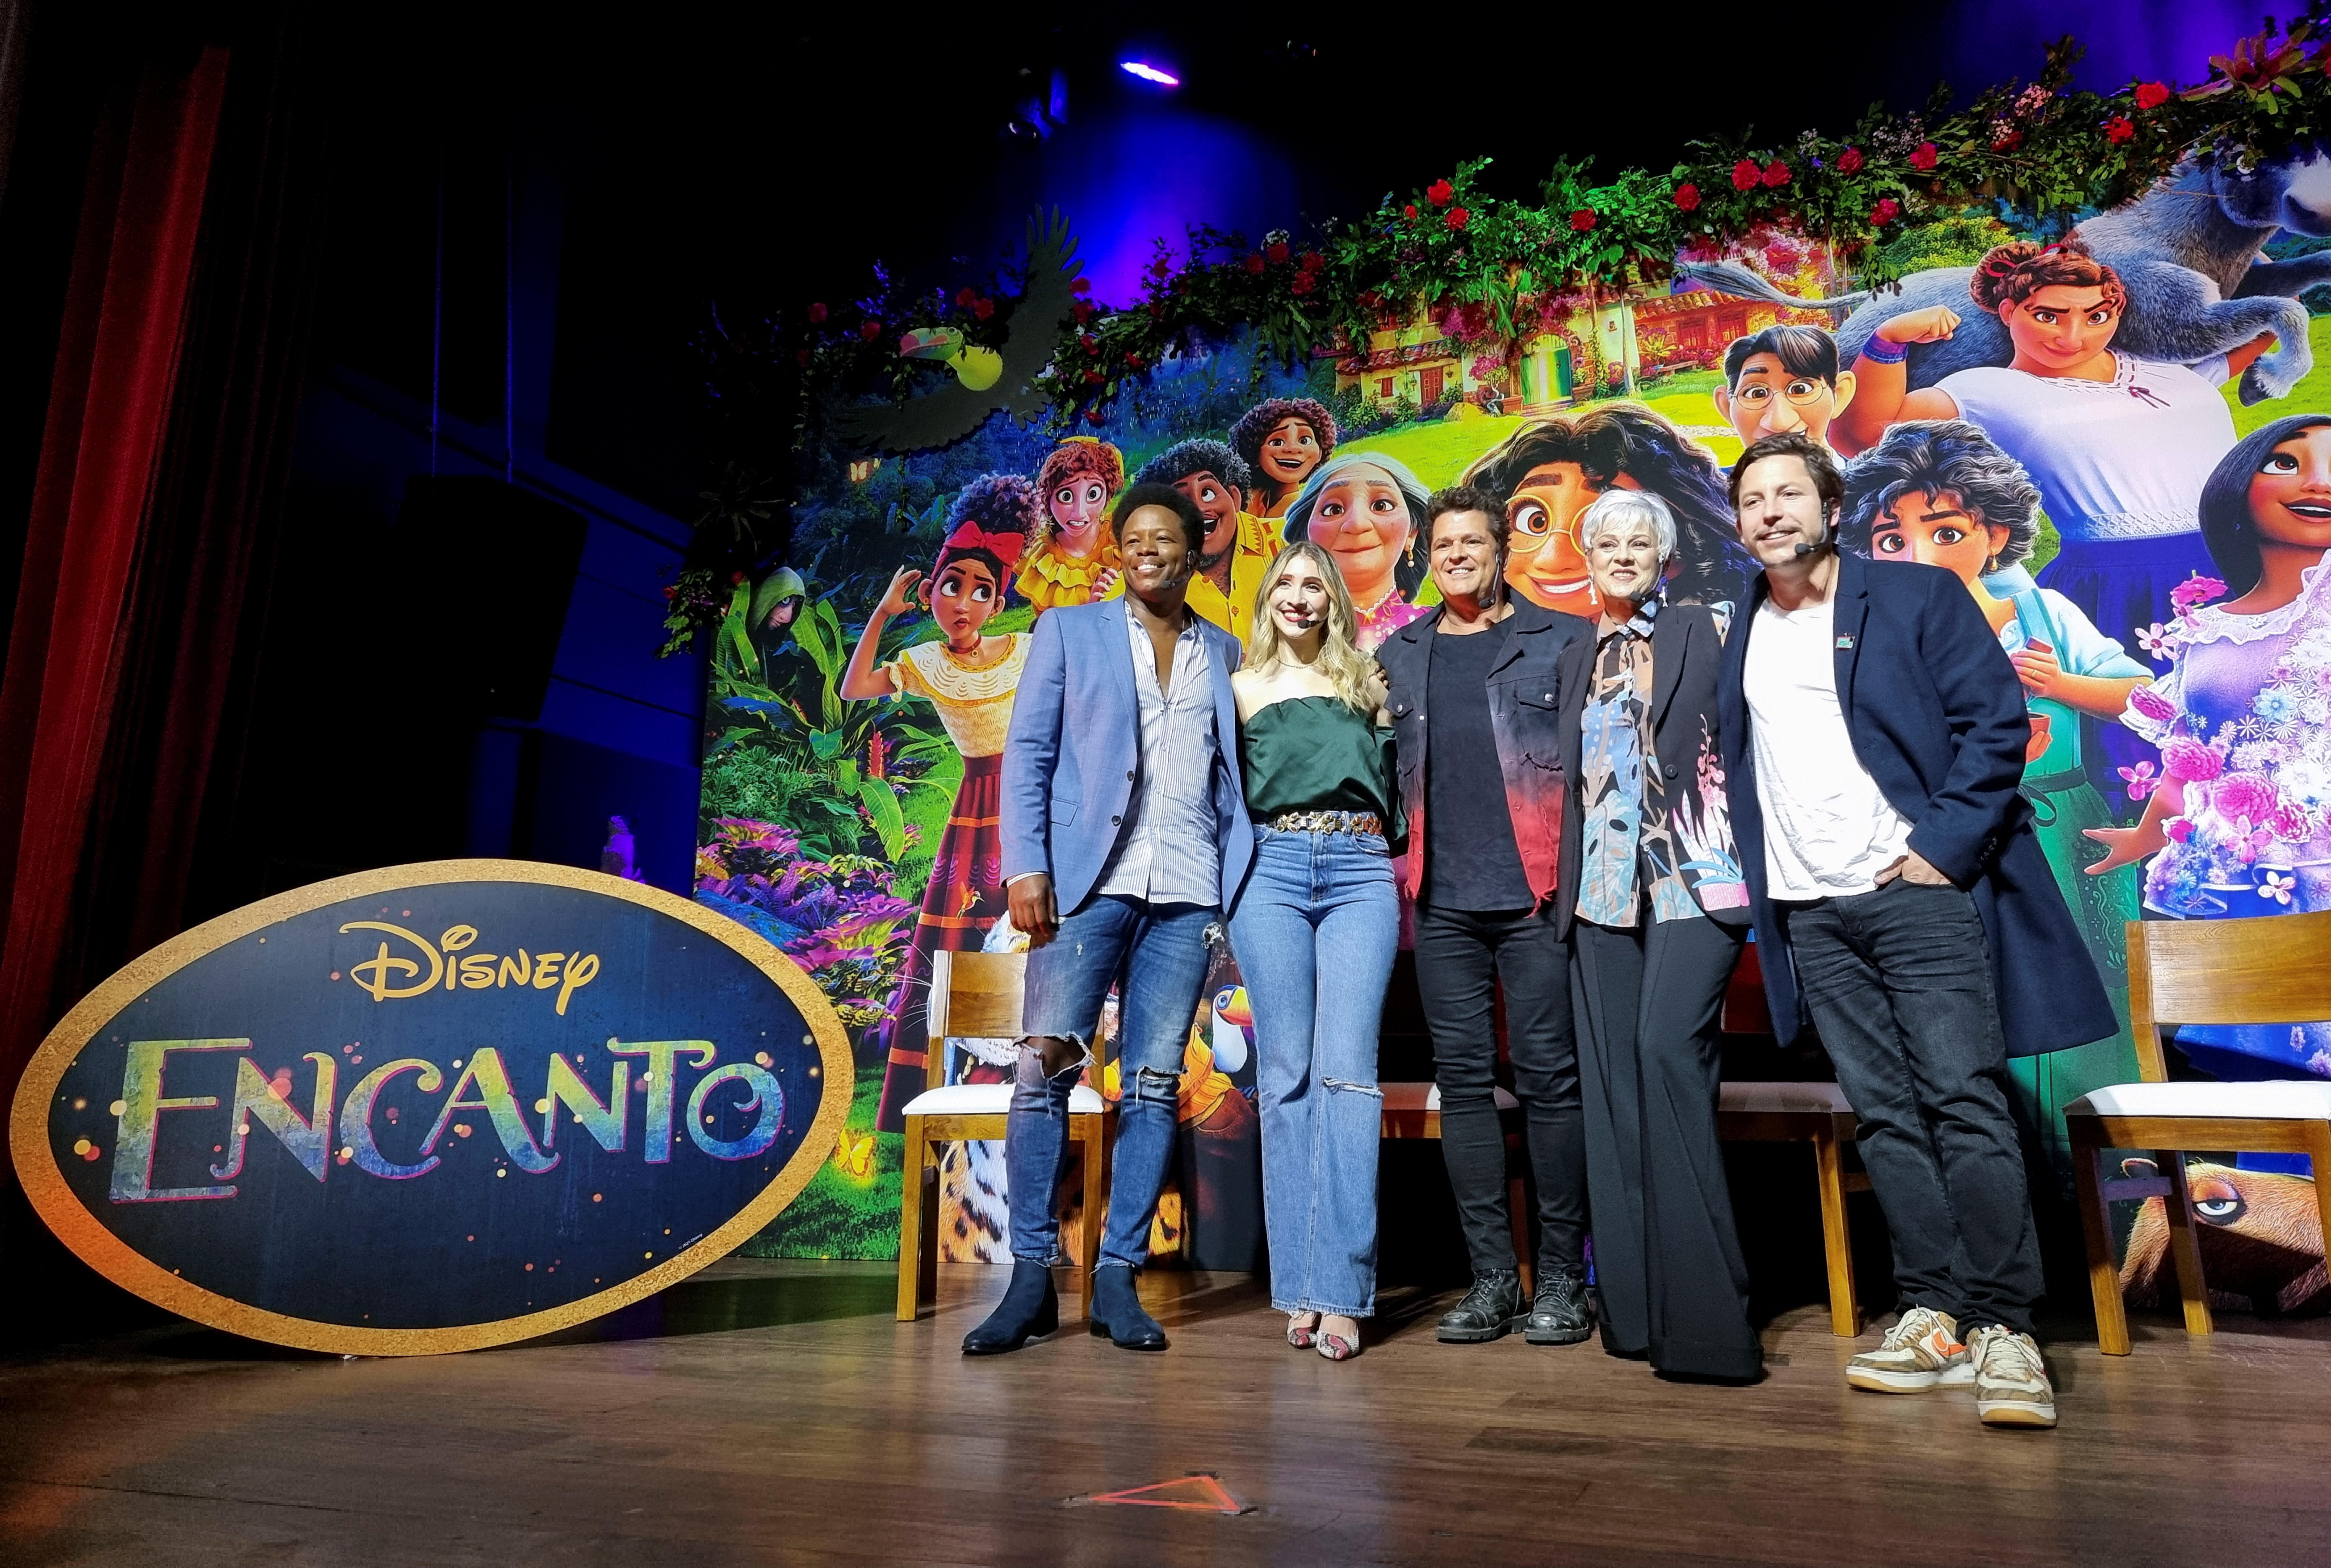 Disney's Encanto celebrates Colombia's diversity, says musician Carlos  Vives